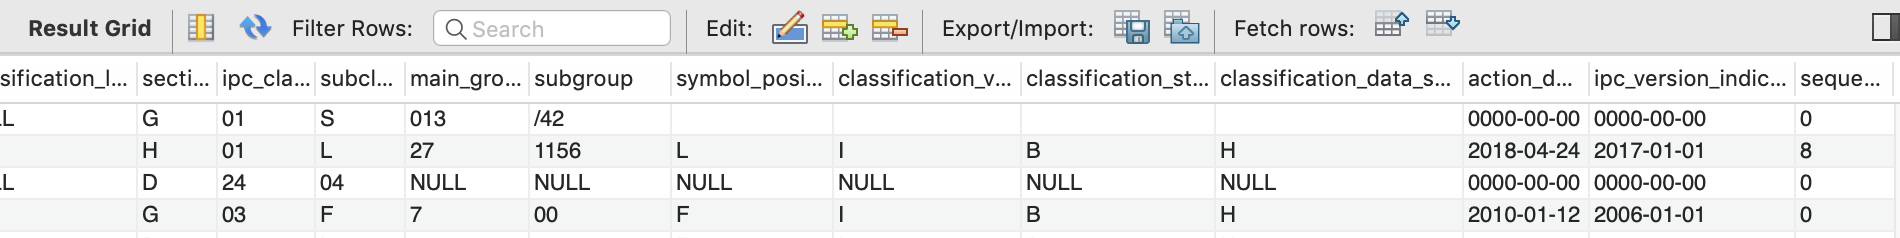 Correct Data as imported via MySQLworkbench